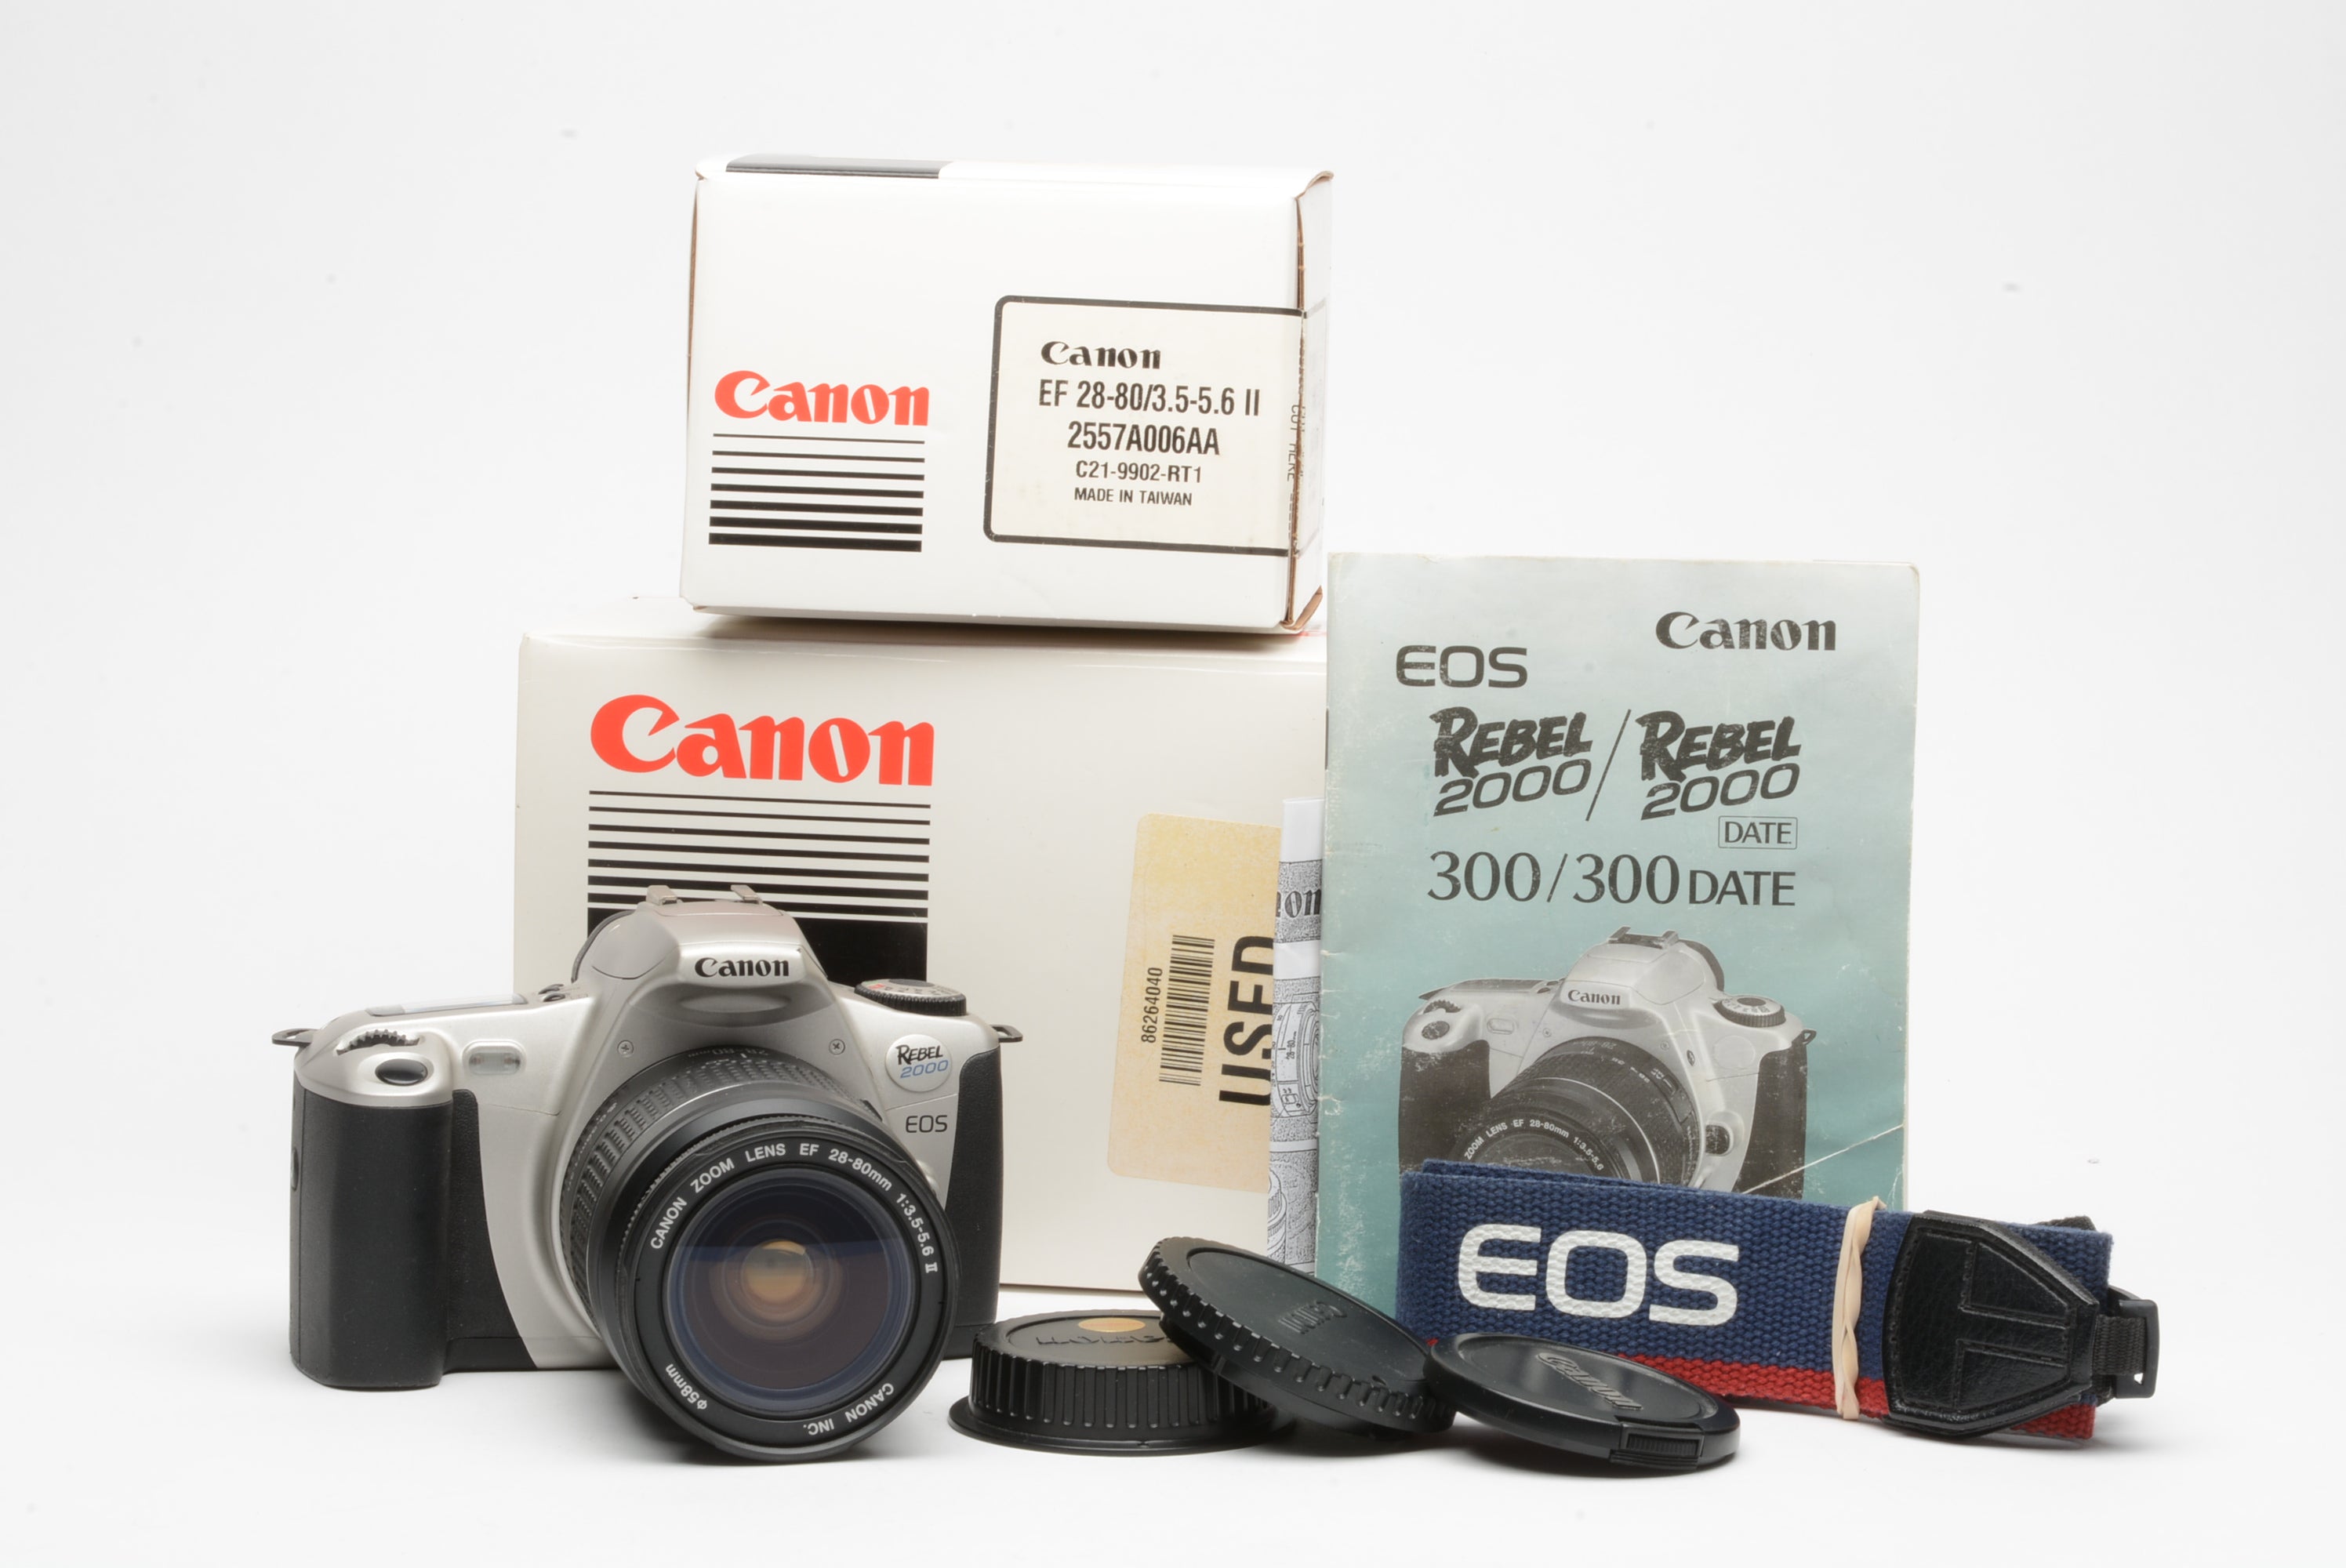 Canon ZOOM LENS EF 28-80mm 1:3.5-5.6 Ⅴ - レンズ(ズーム)